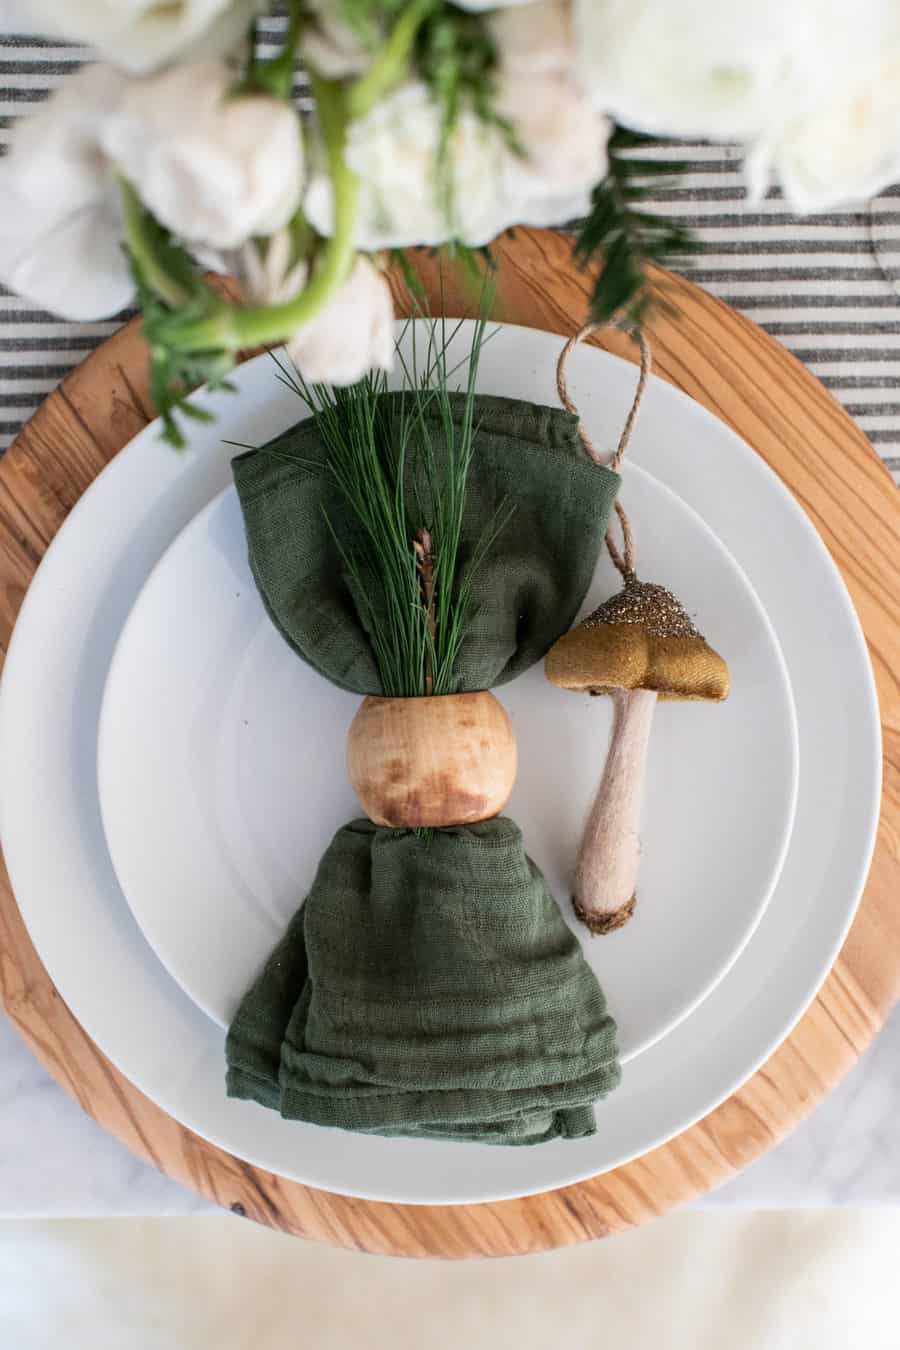 Green napkin, wooden napkin ring and a mushroom ornament.